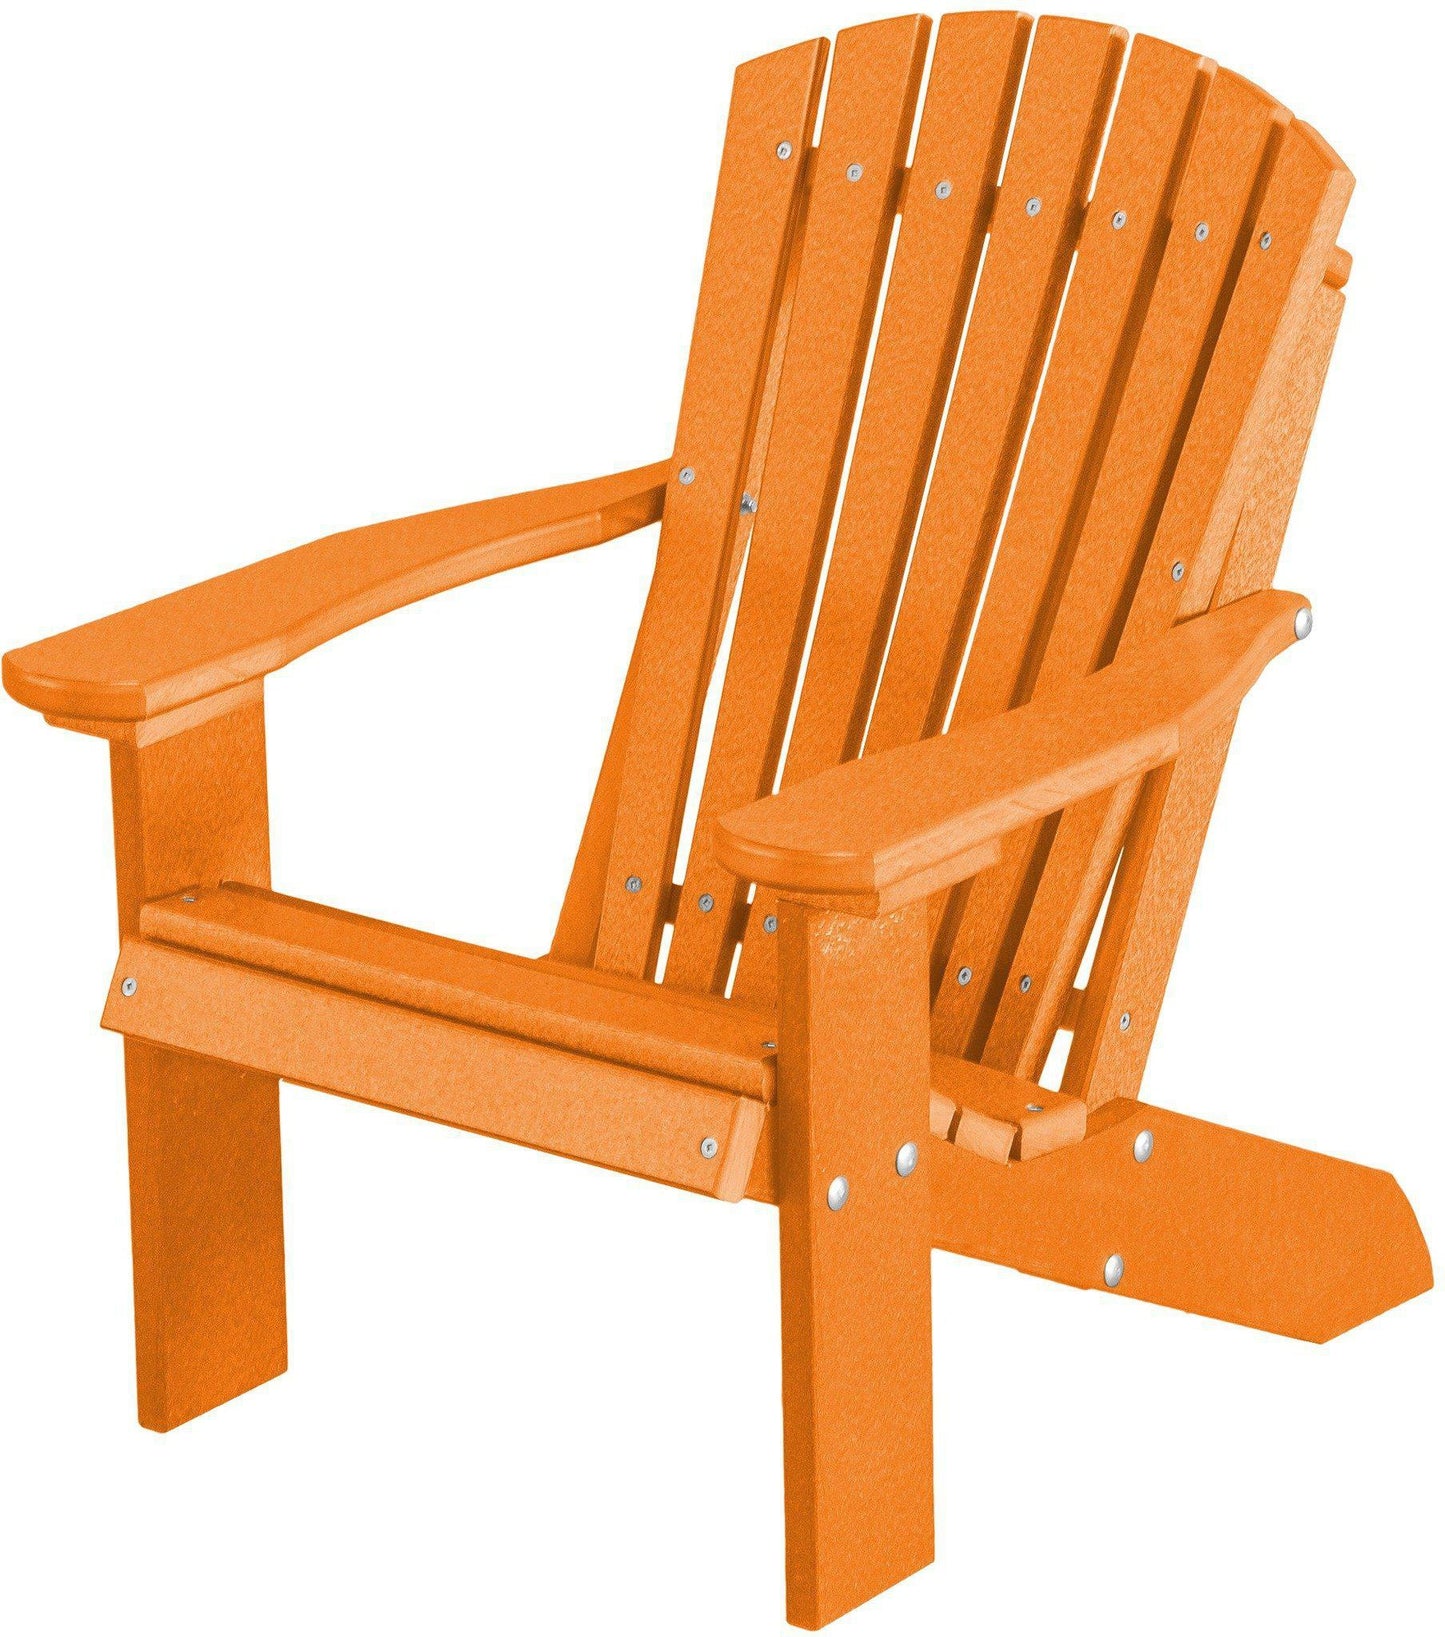 wildridge outdoor recycled plastic children's adirondack chair orange